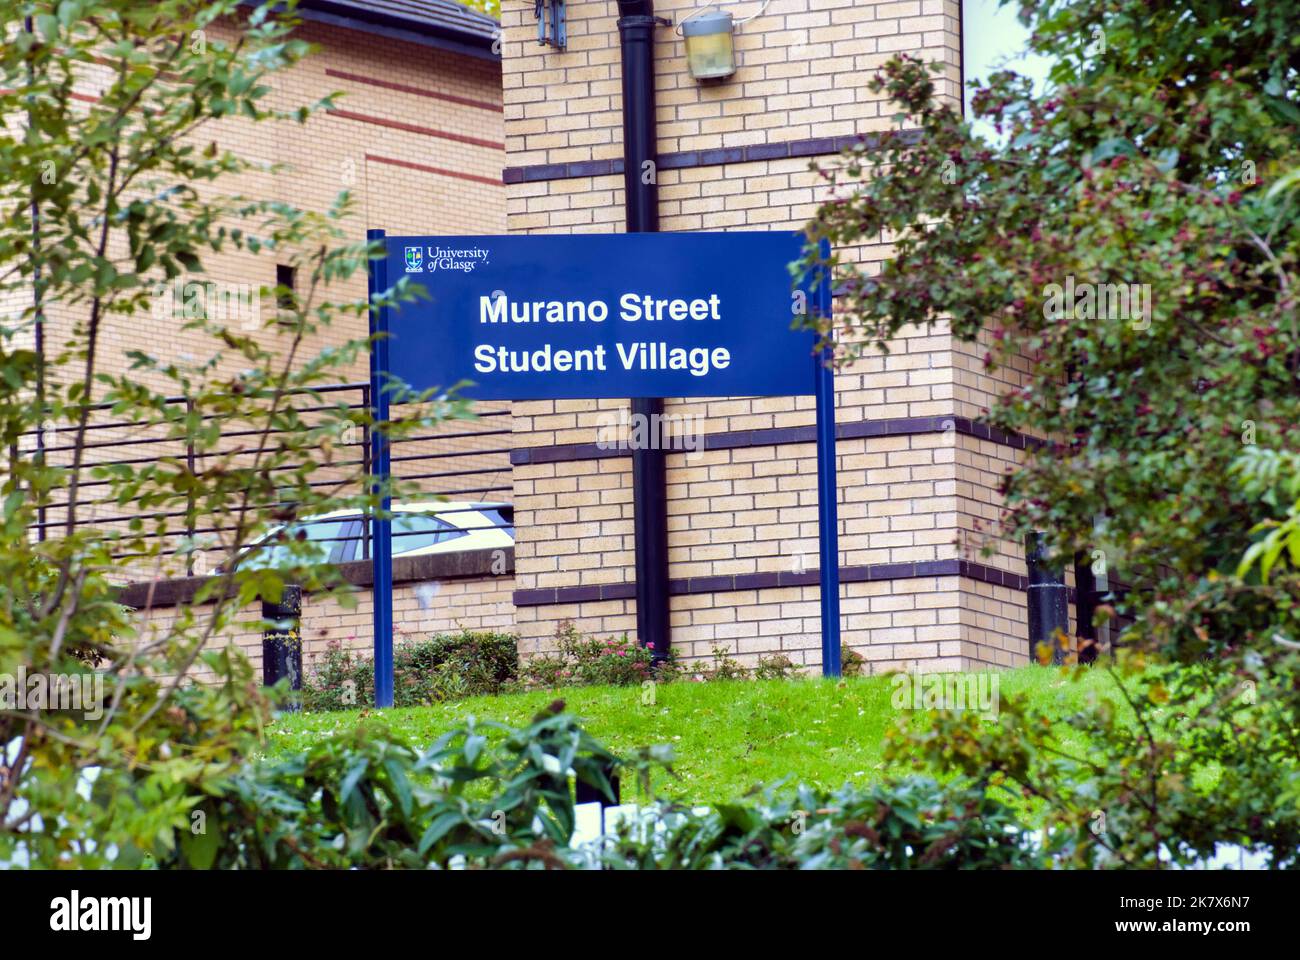 Murano street student village sign Maryhill university of Glasgow residences Stock Photo